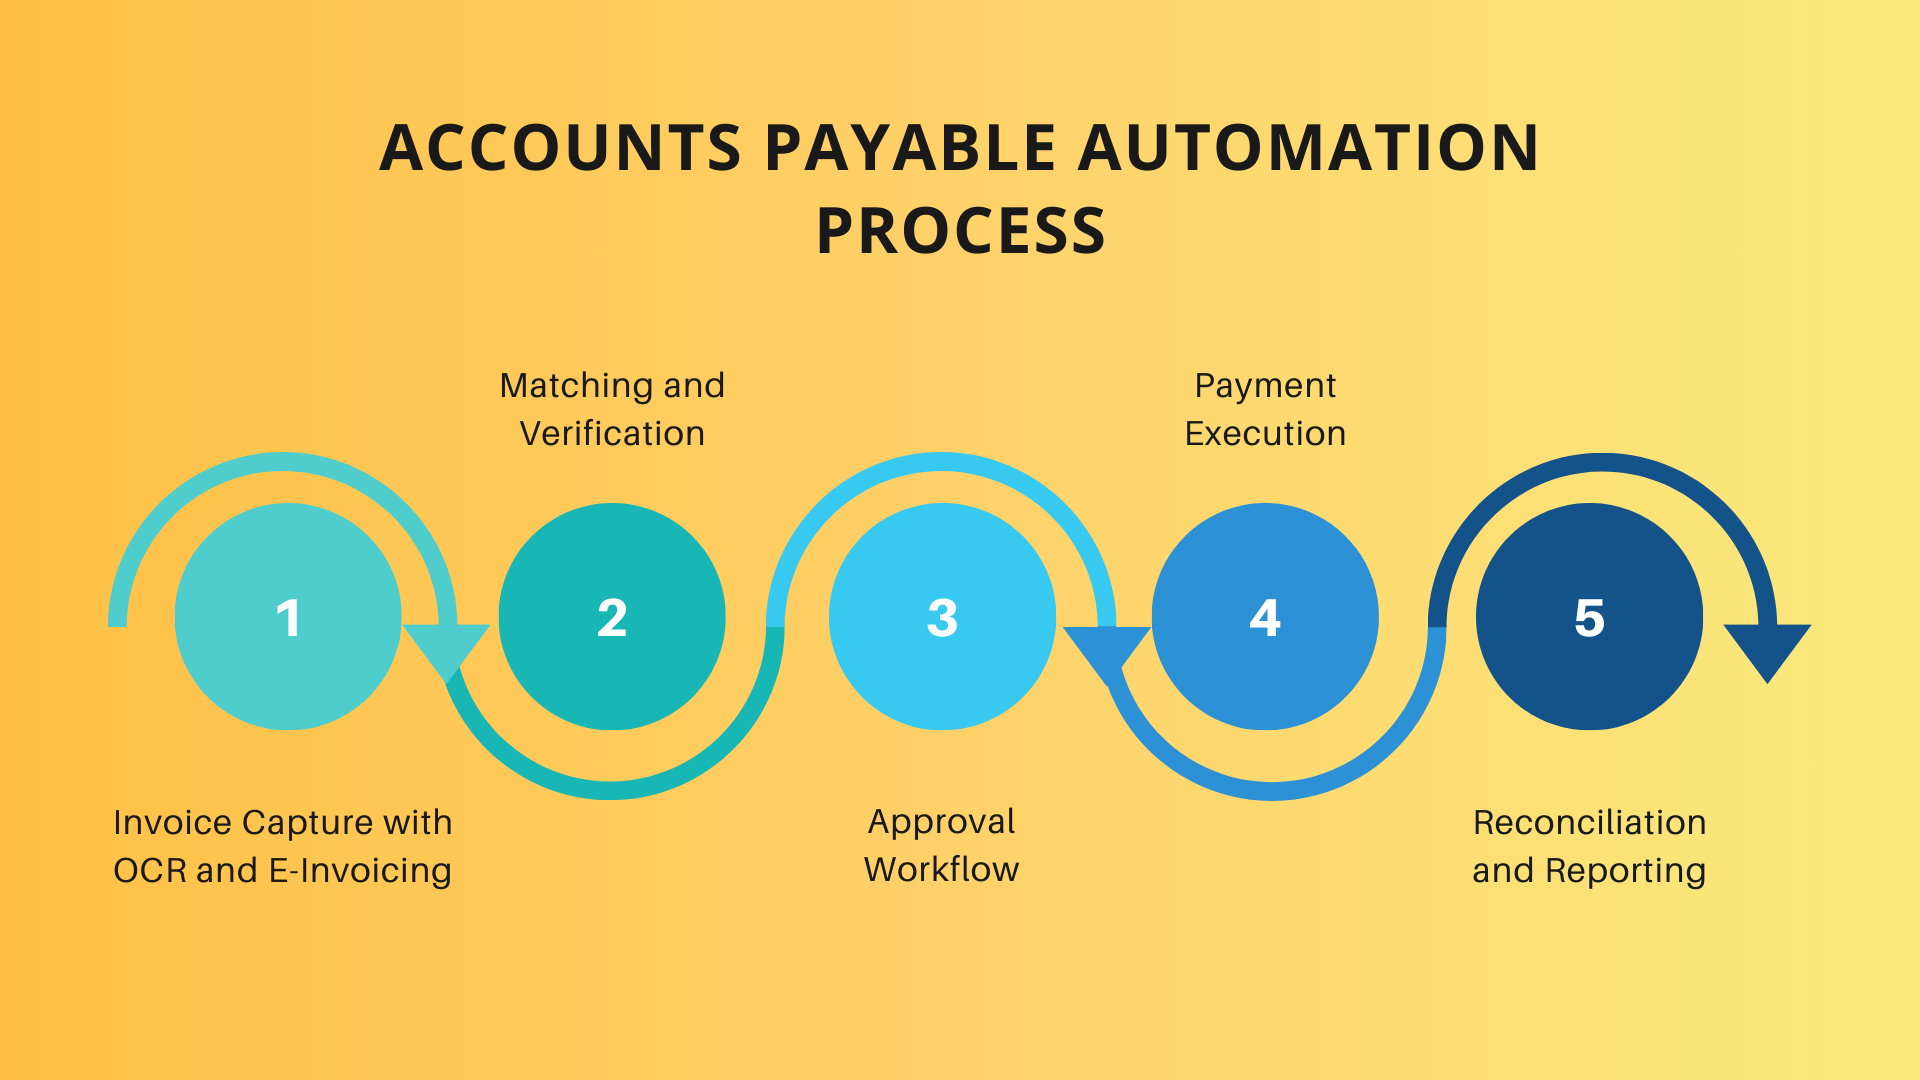 Accounts Payable Automation process